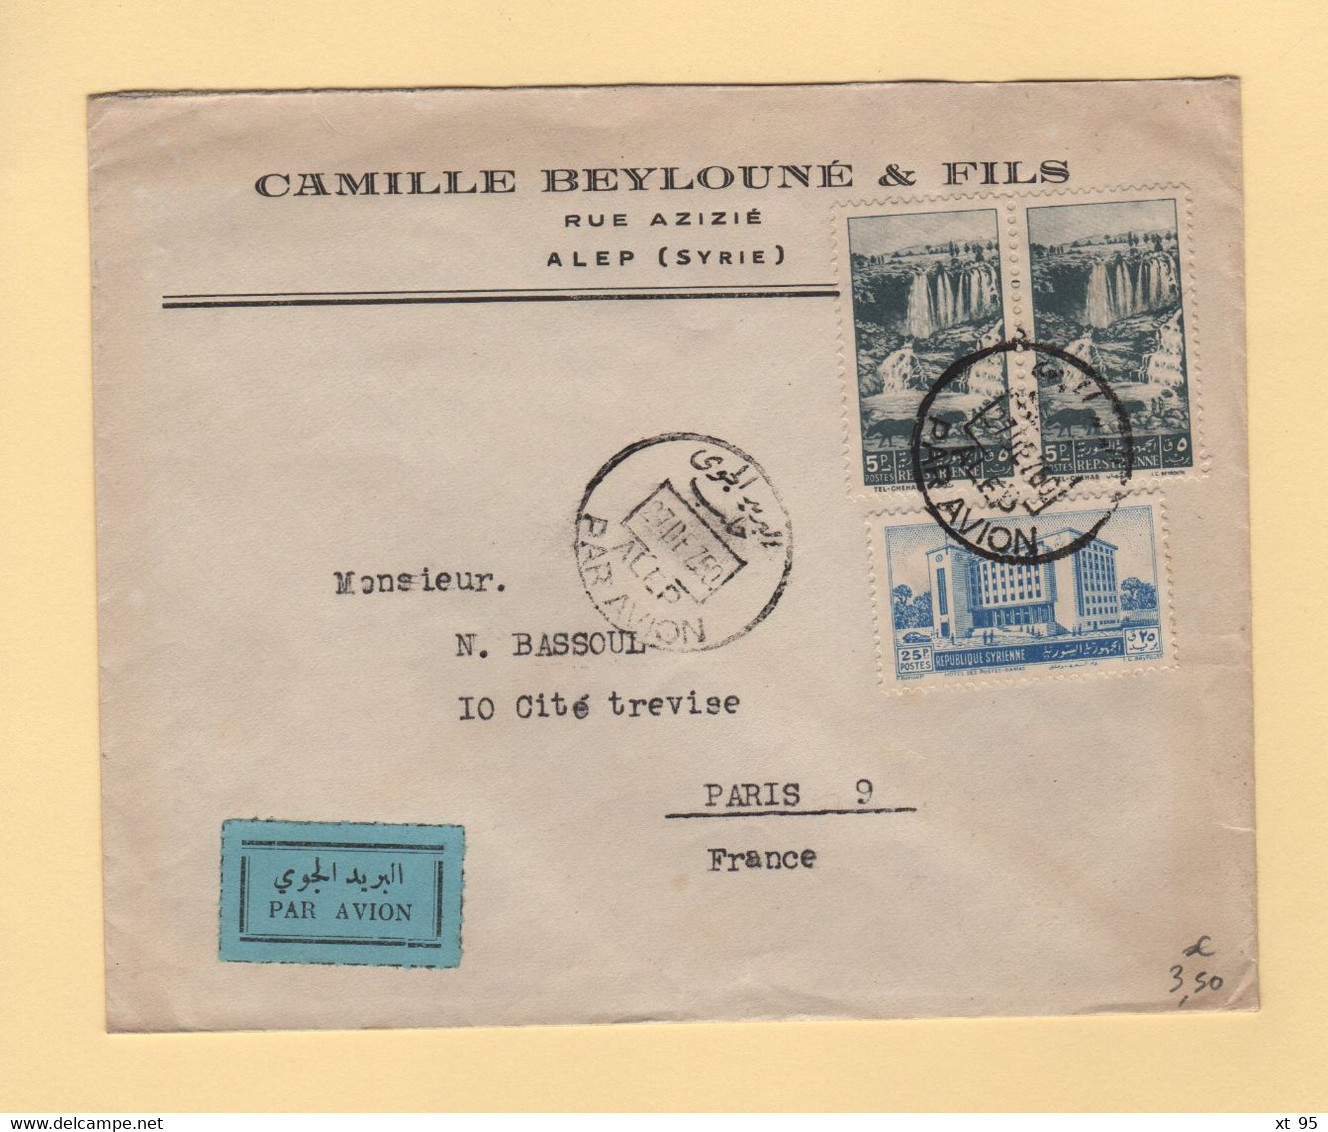 Syrie - Alep - 1950 - Par Avion Destination France - Syria